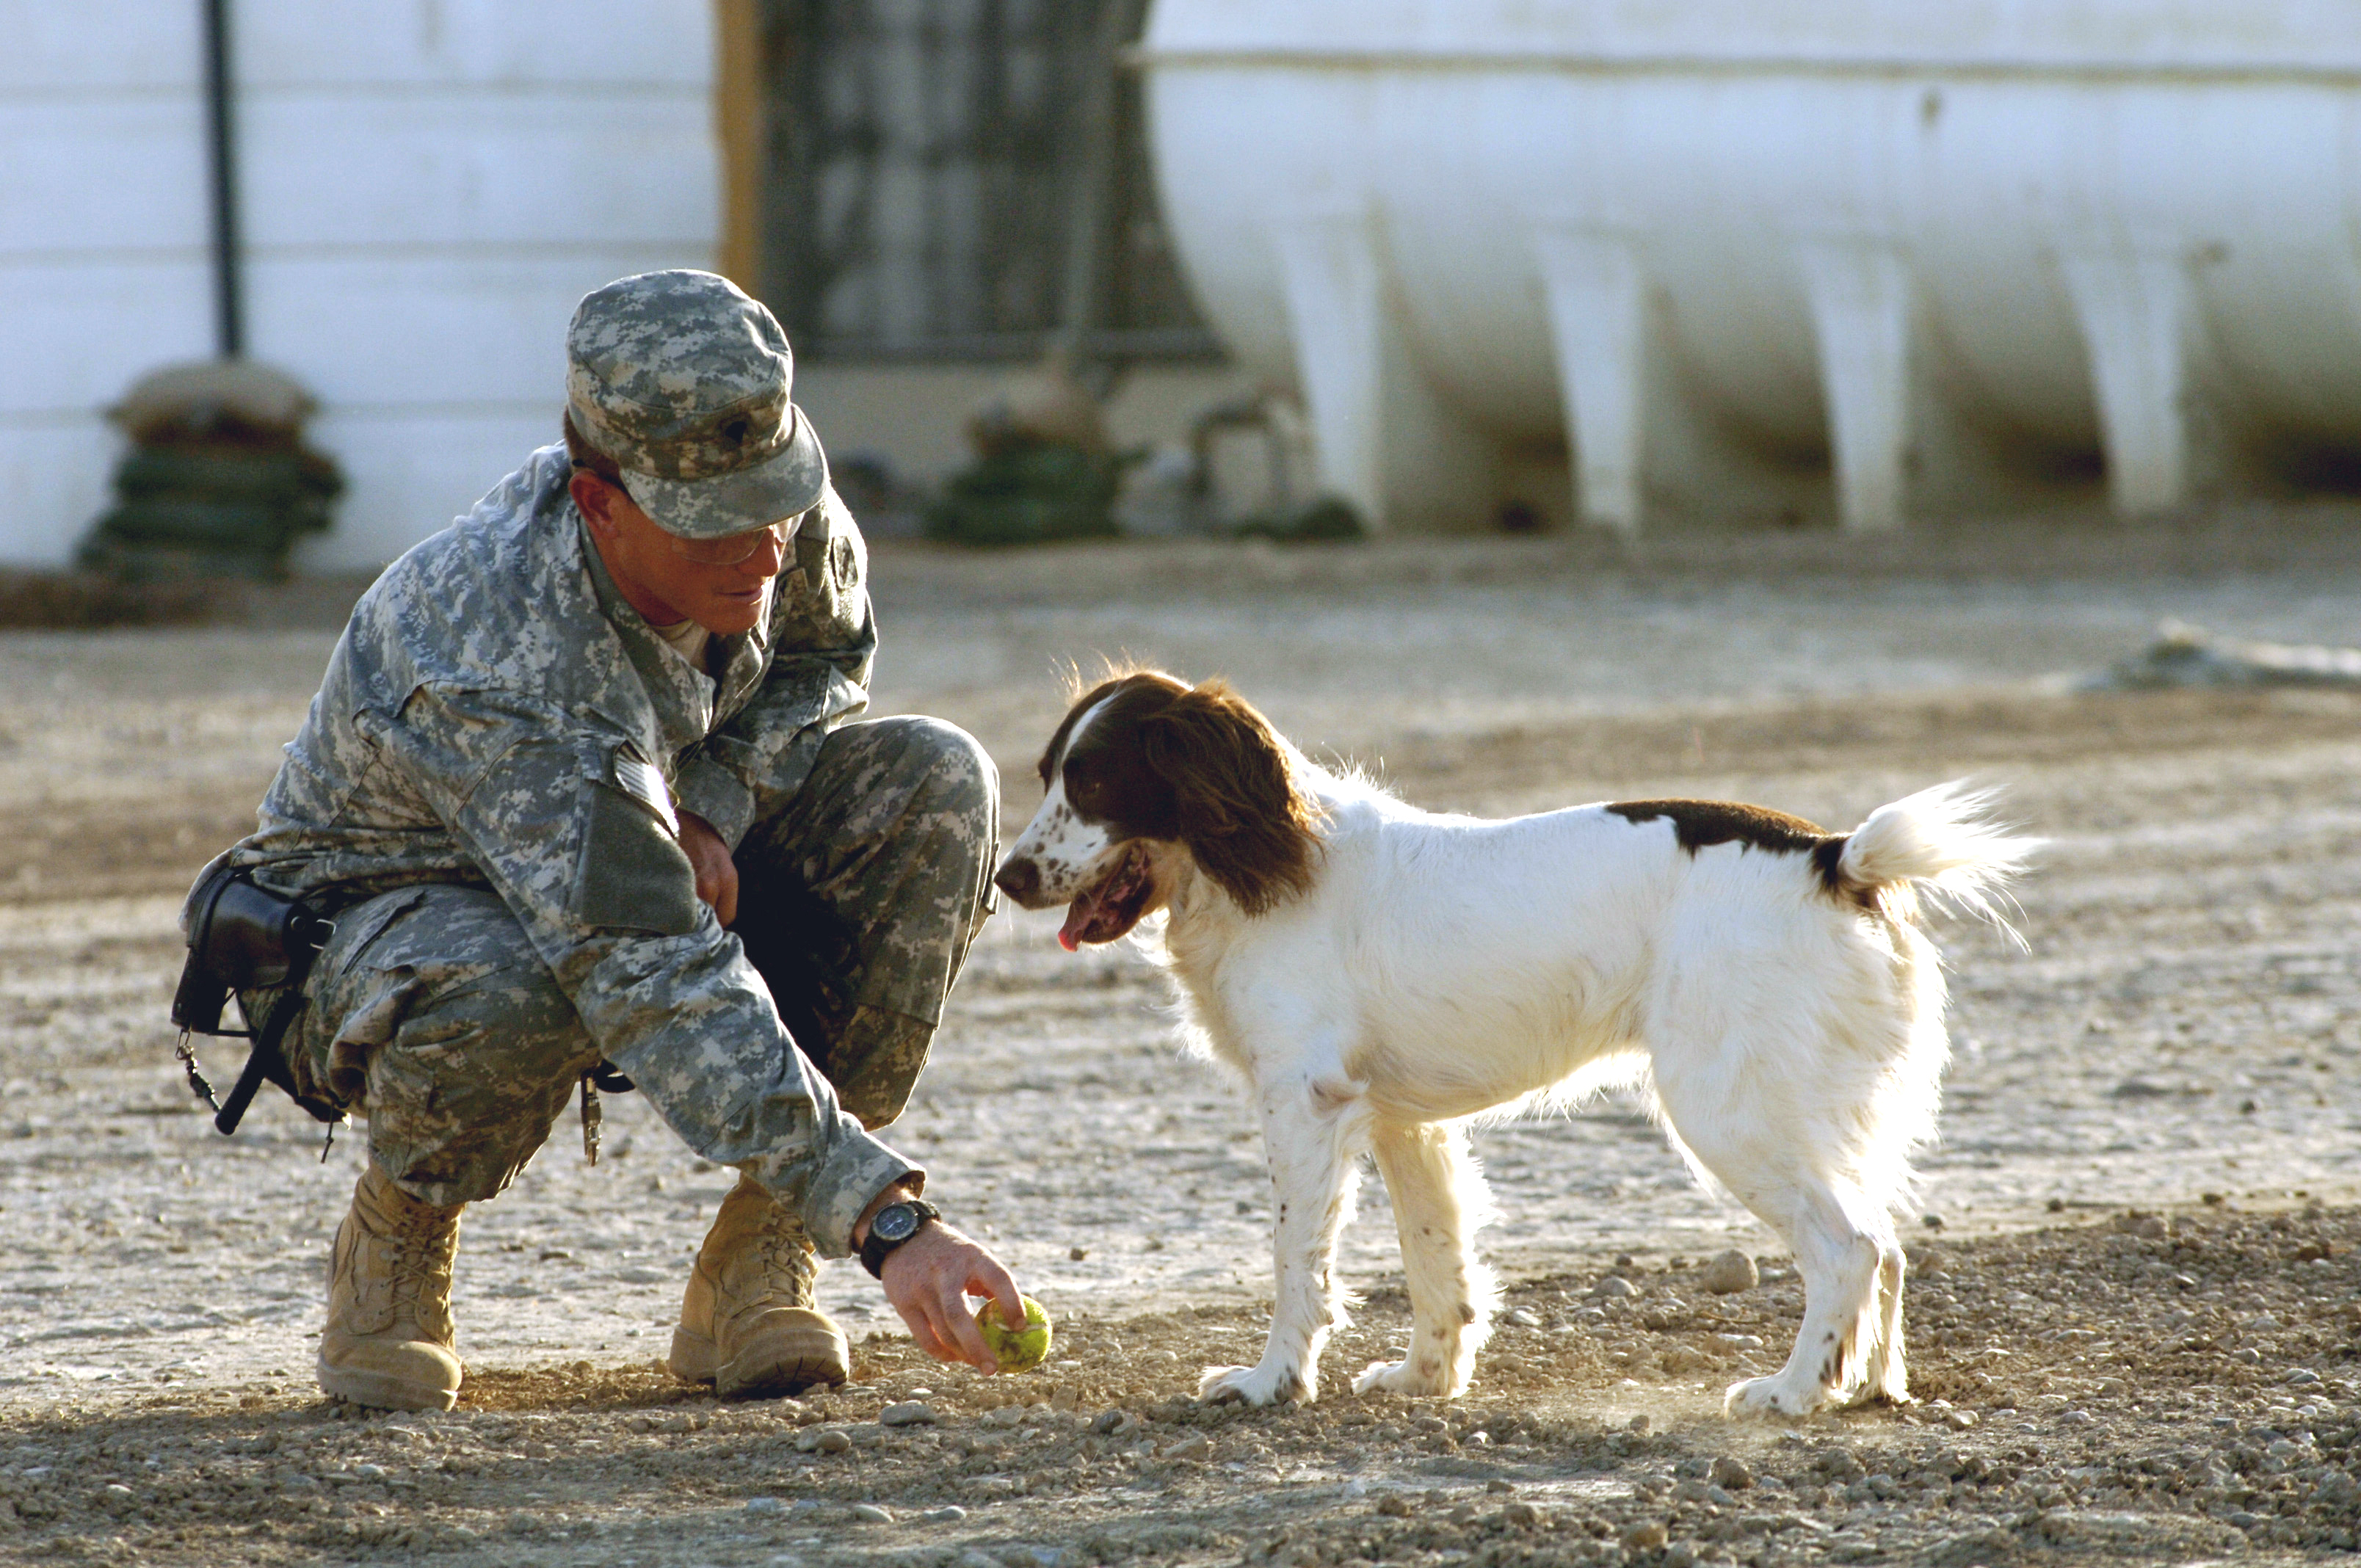 http://roxanaiordache.files.wordpress.com/2011/05/military-dog-defense-gov.jpg